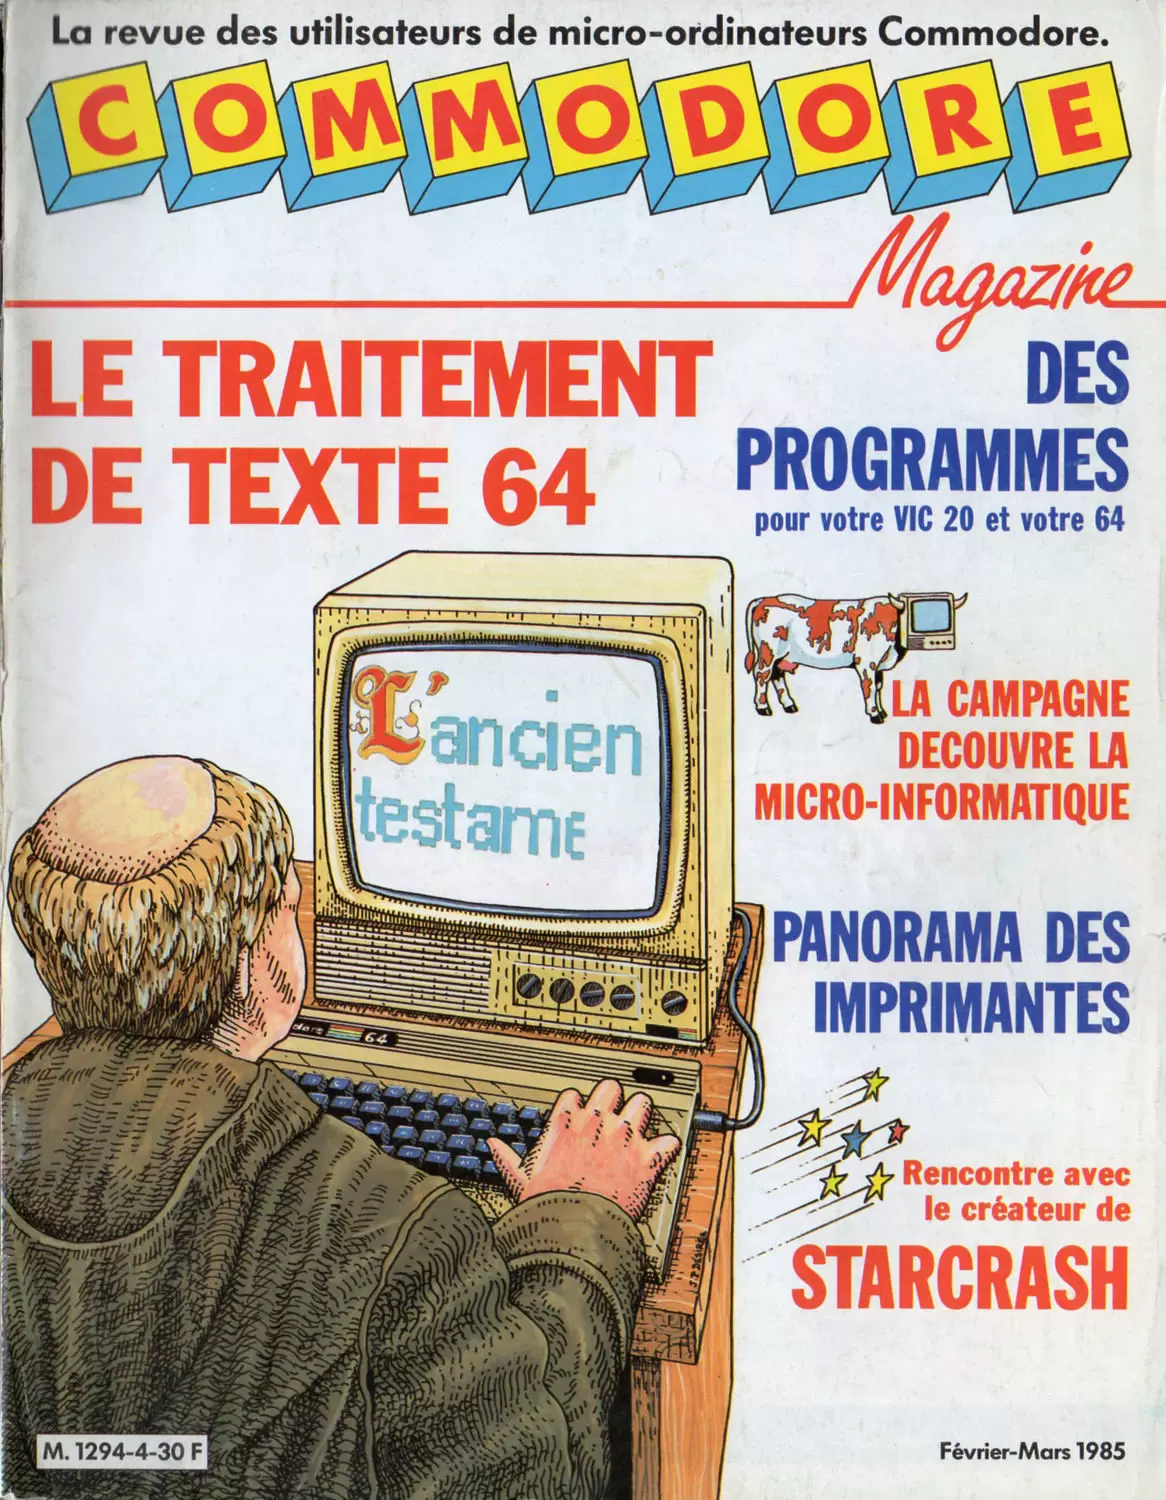 Commodore Magazine - Commodore Magazine n°4